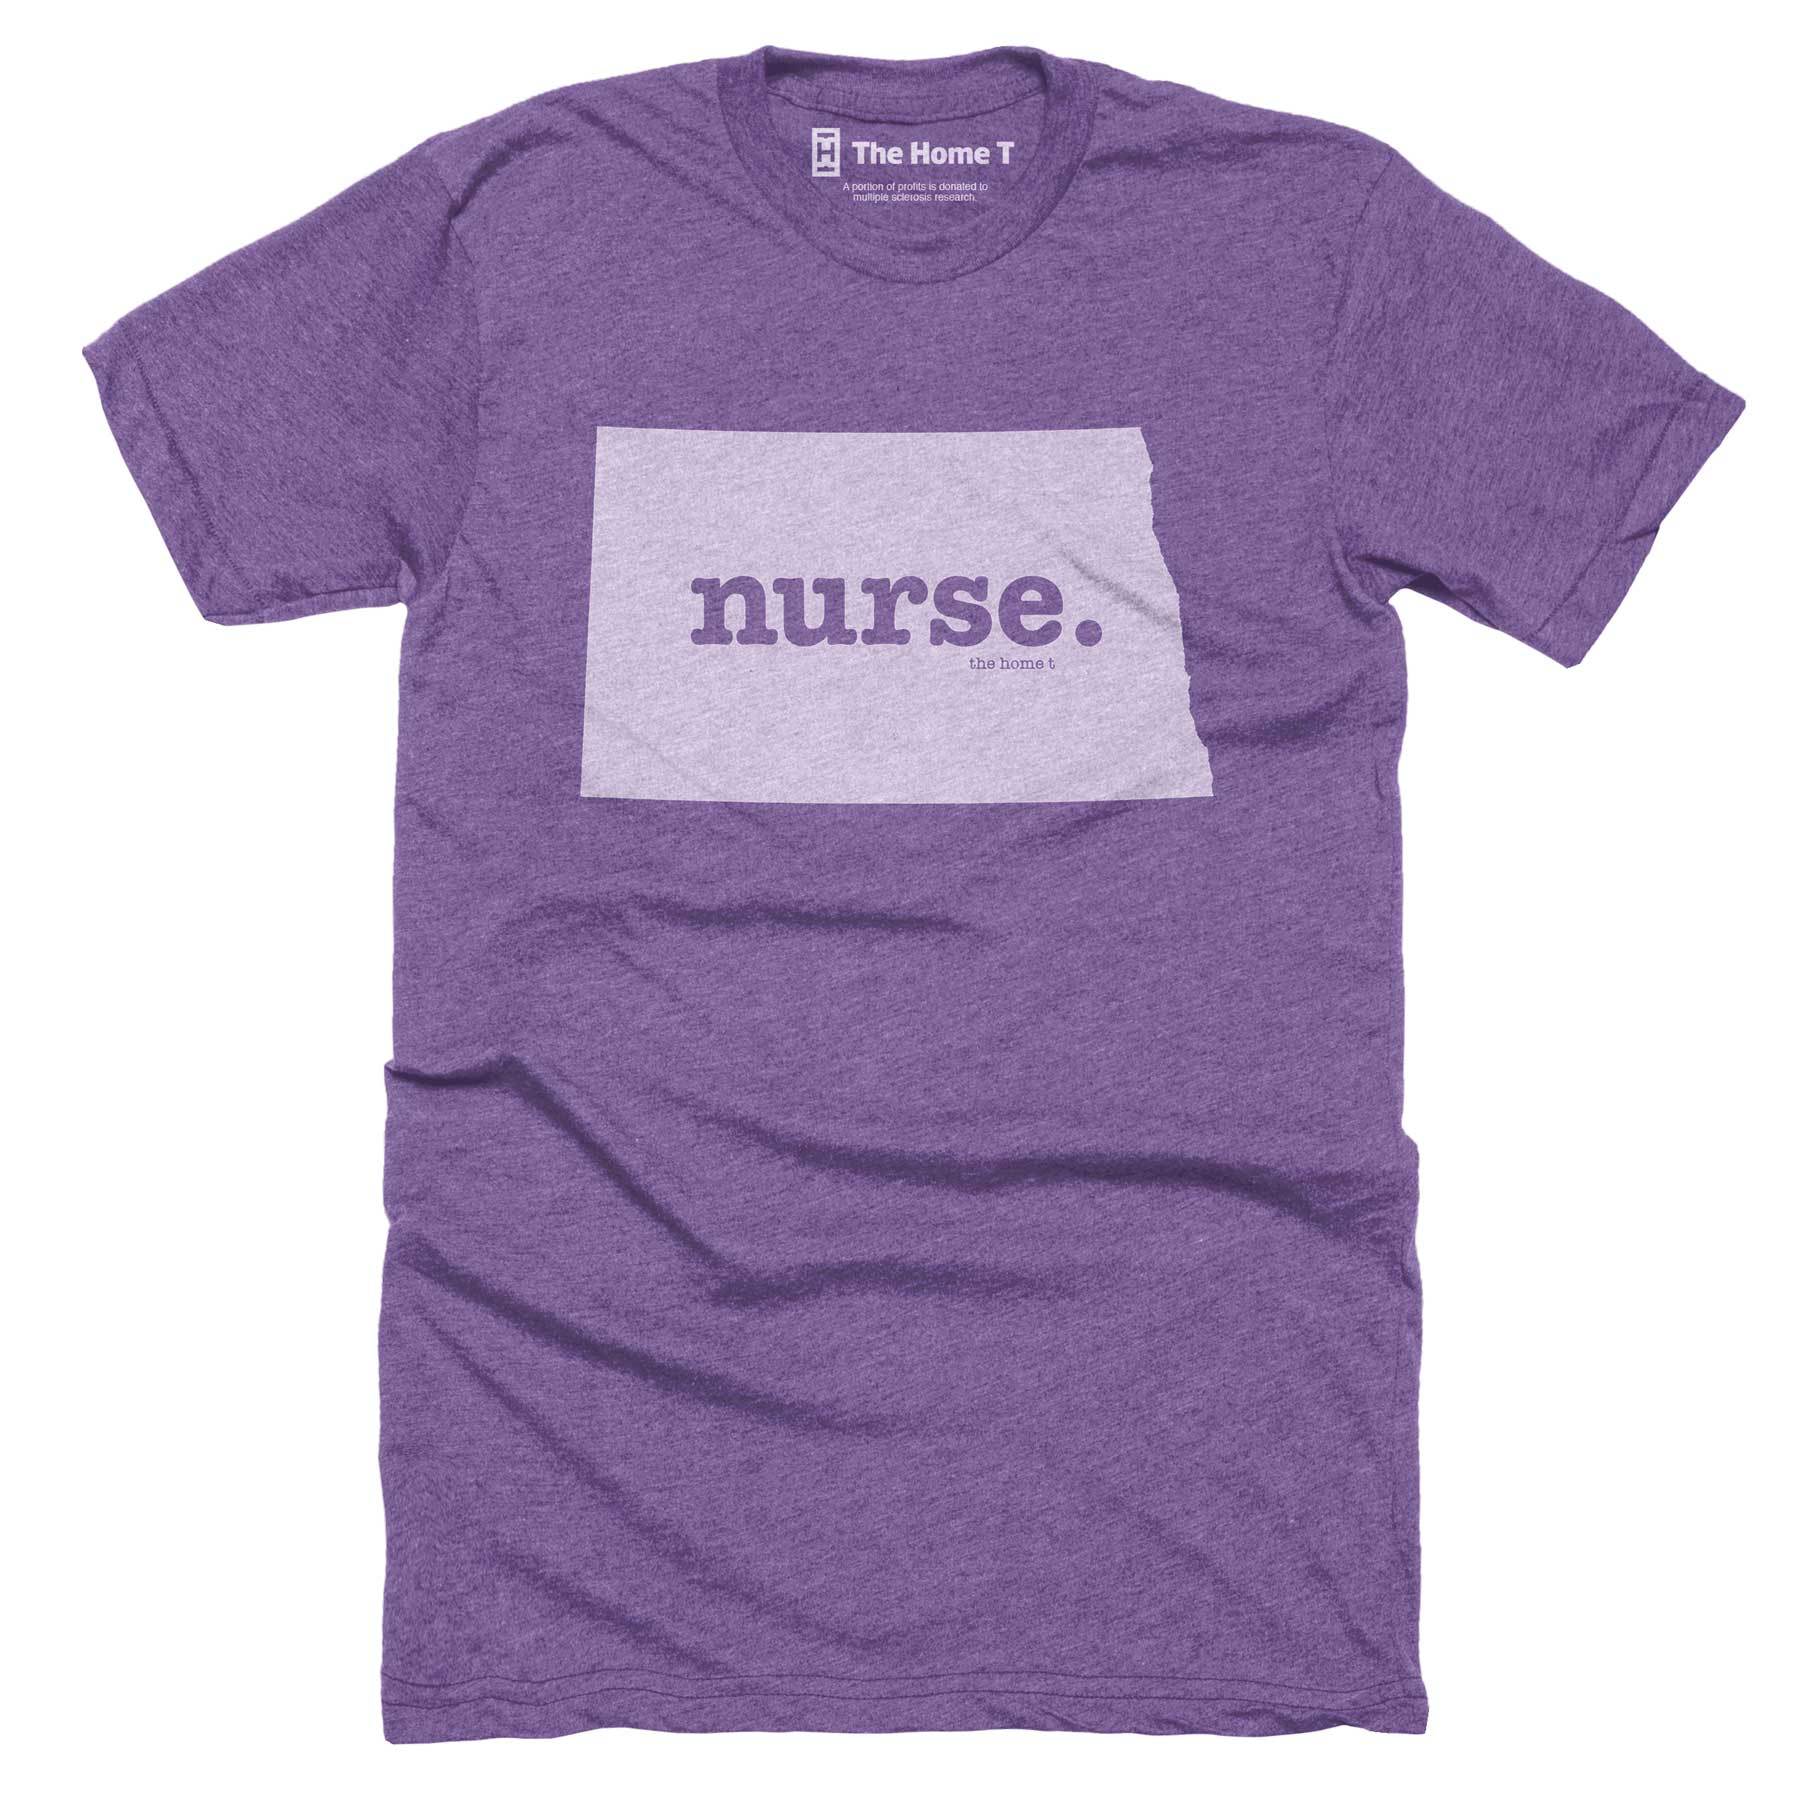 North Dakota Nurse Home T-Shirt Occupation The Home T